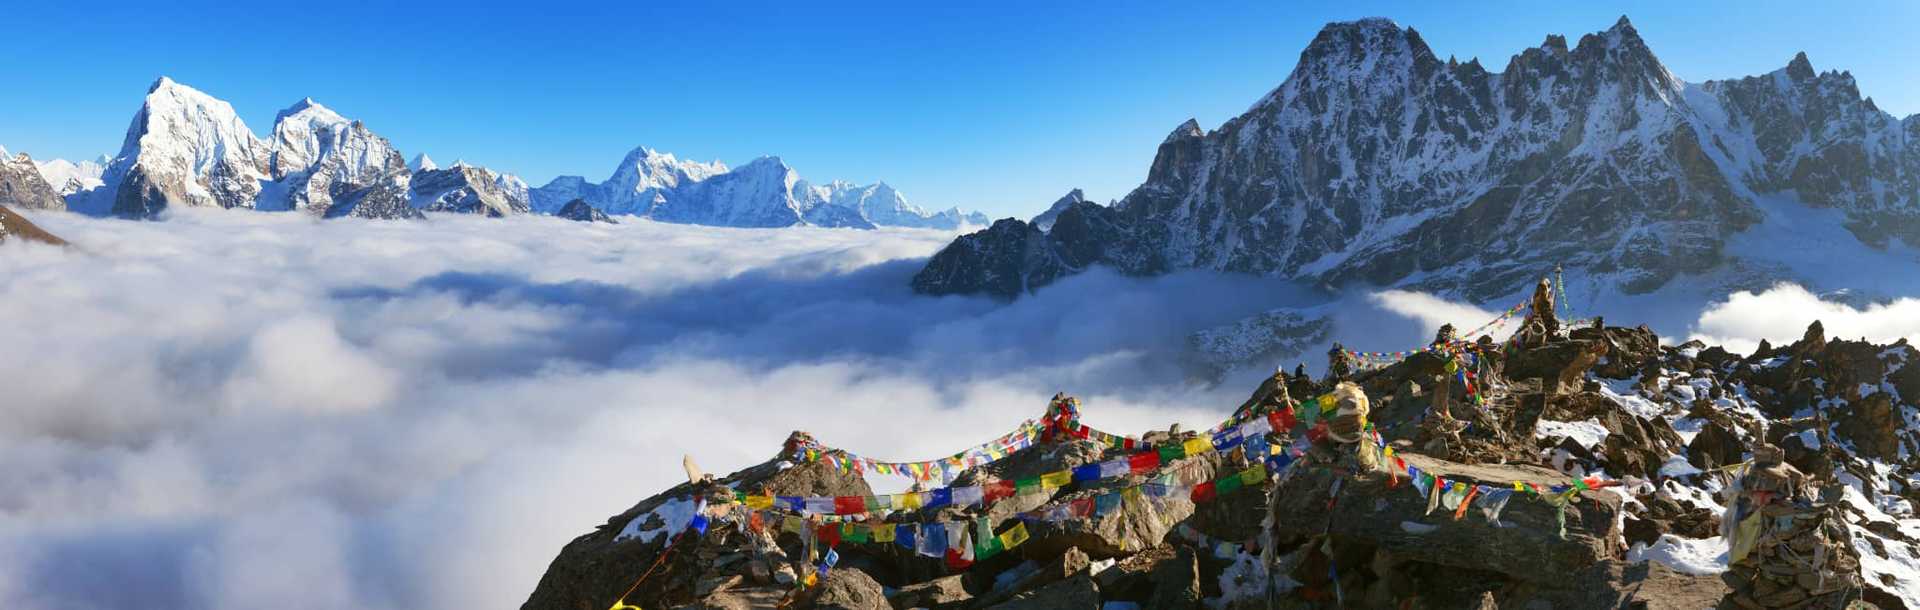 The view from Gokyo Ri to Arakam Tse trekking to Everest base camp in Nepal.